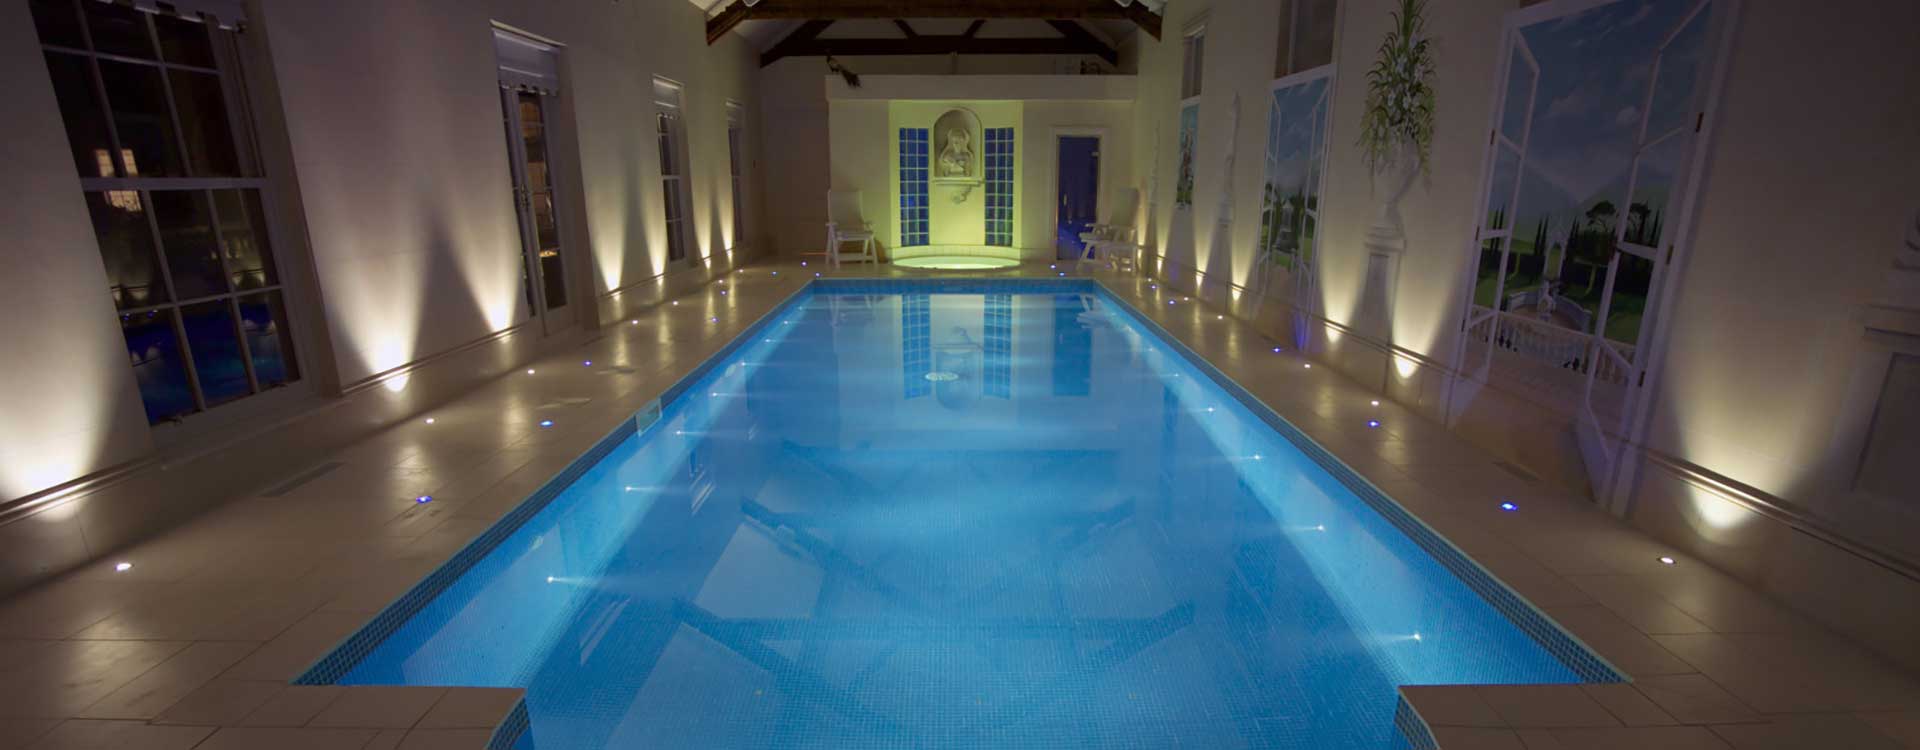 fibre optic lighting in a private pool